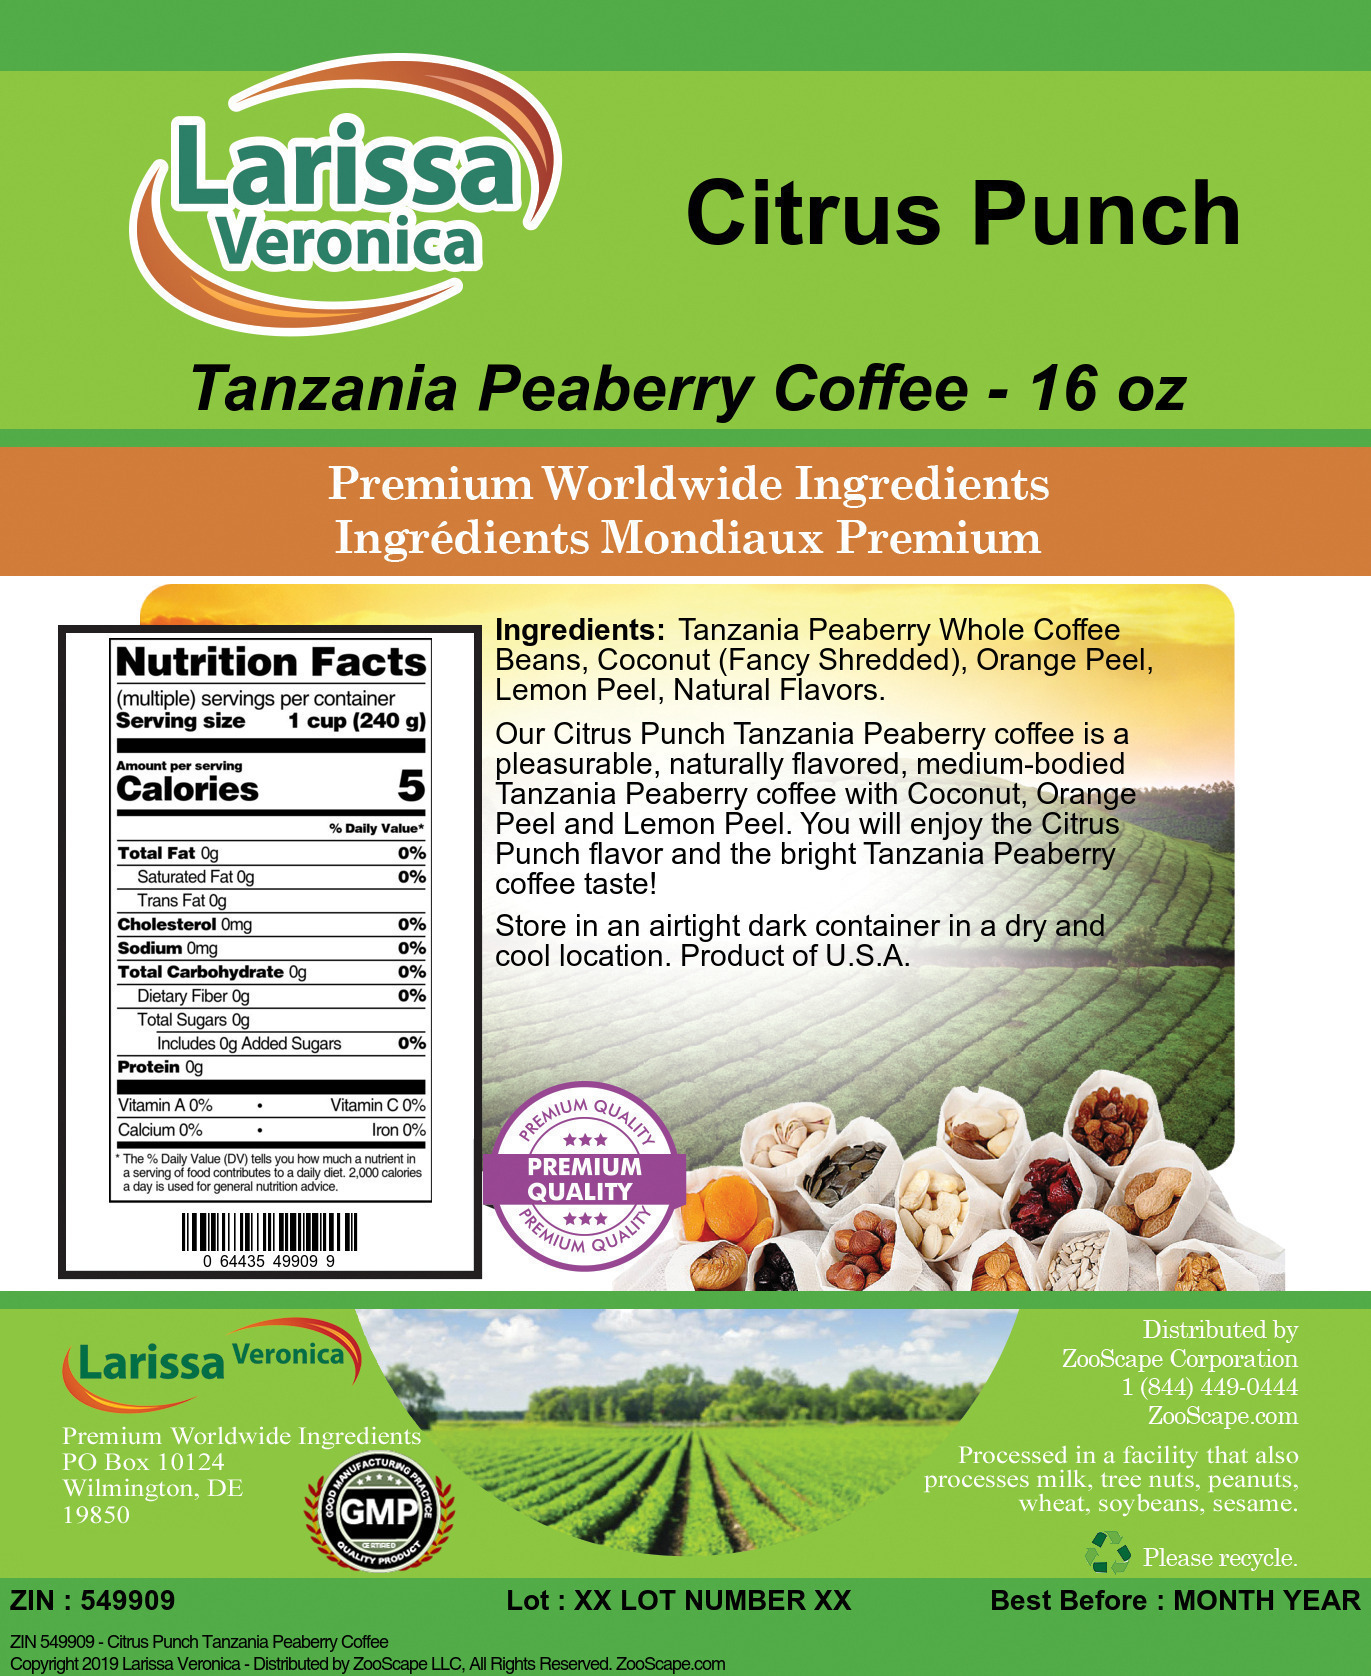 Citrus Punch Tanzania Peaberry Coffee - Label